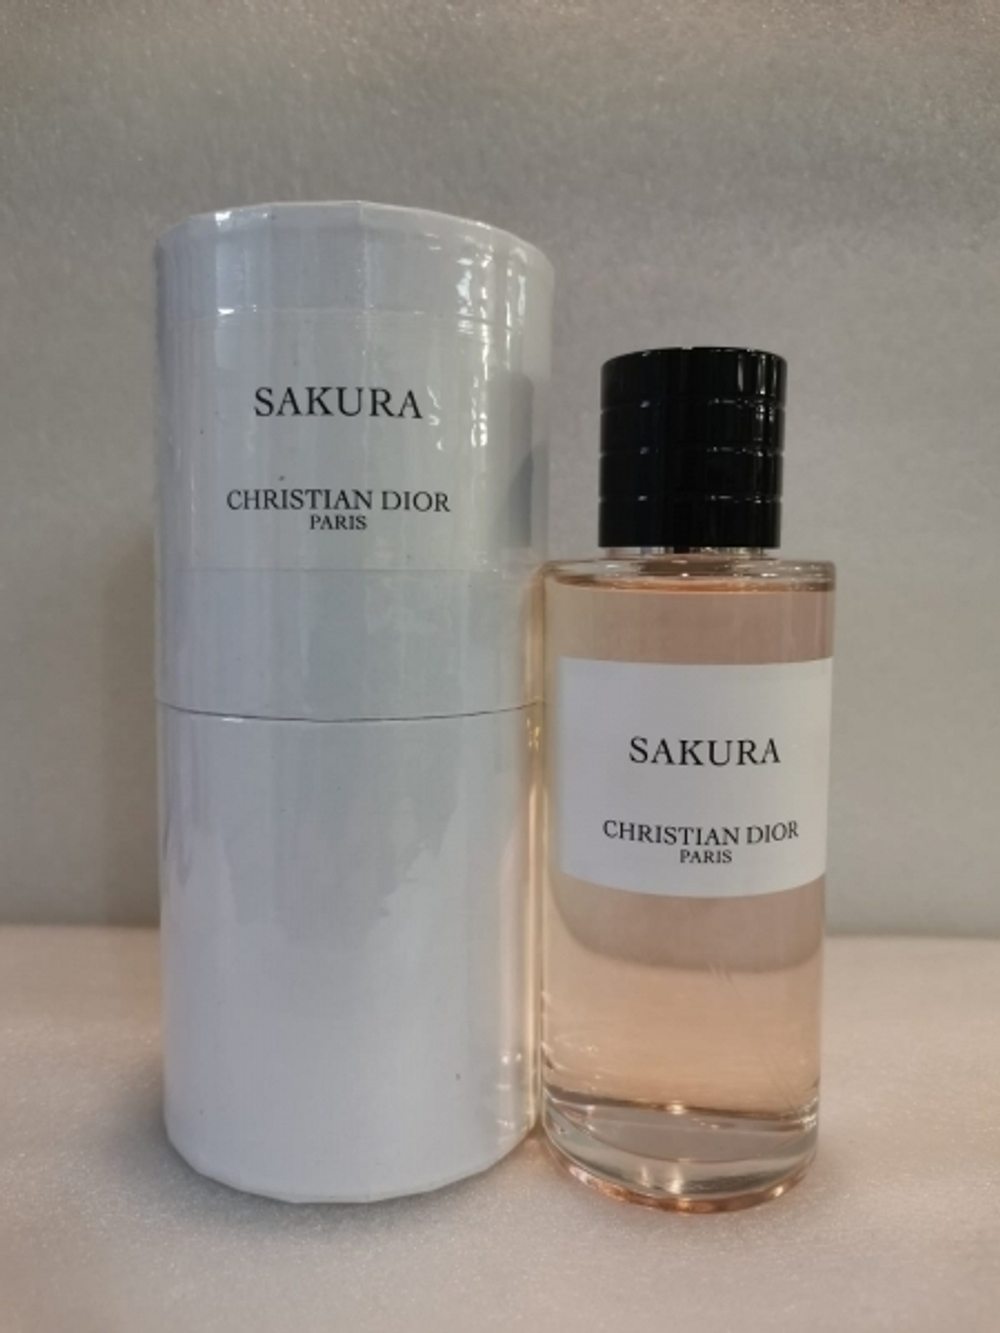 Christian Dior Sakura 125 ml (duty free парфюмерия)